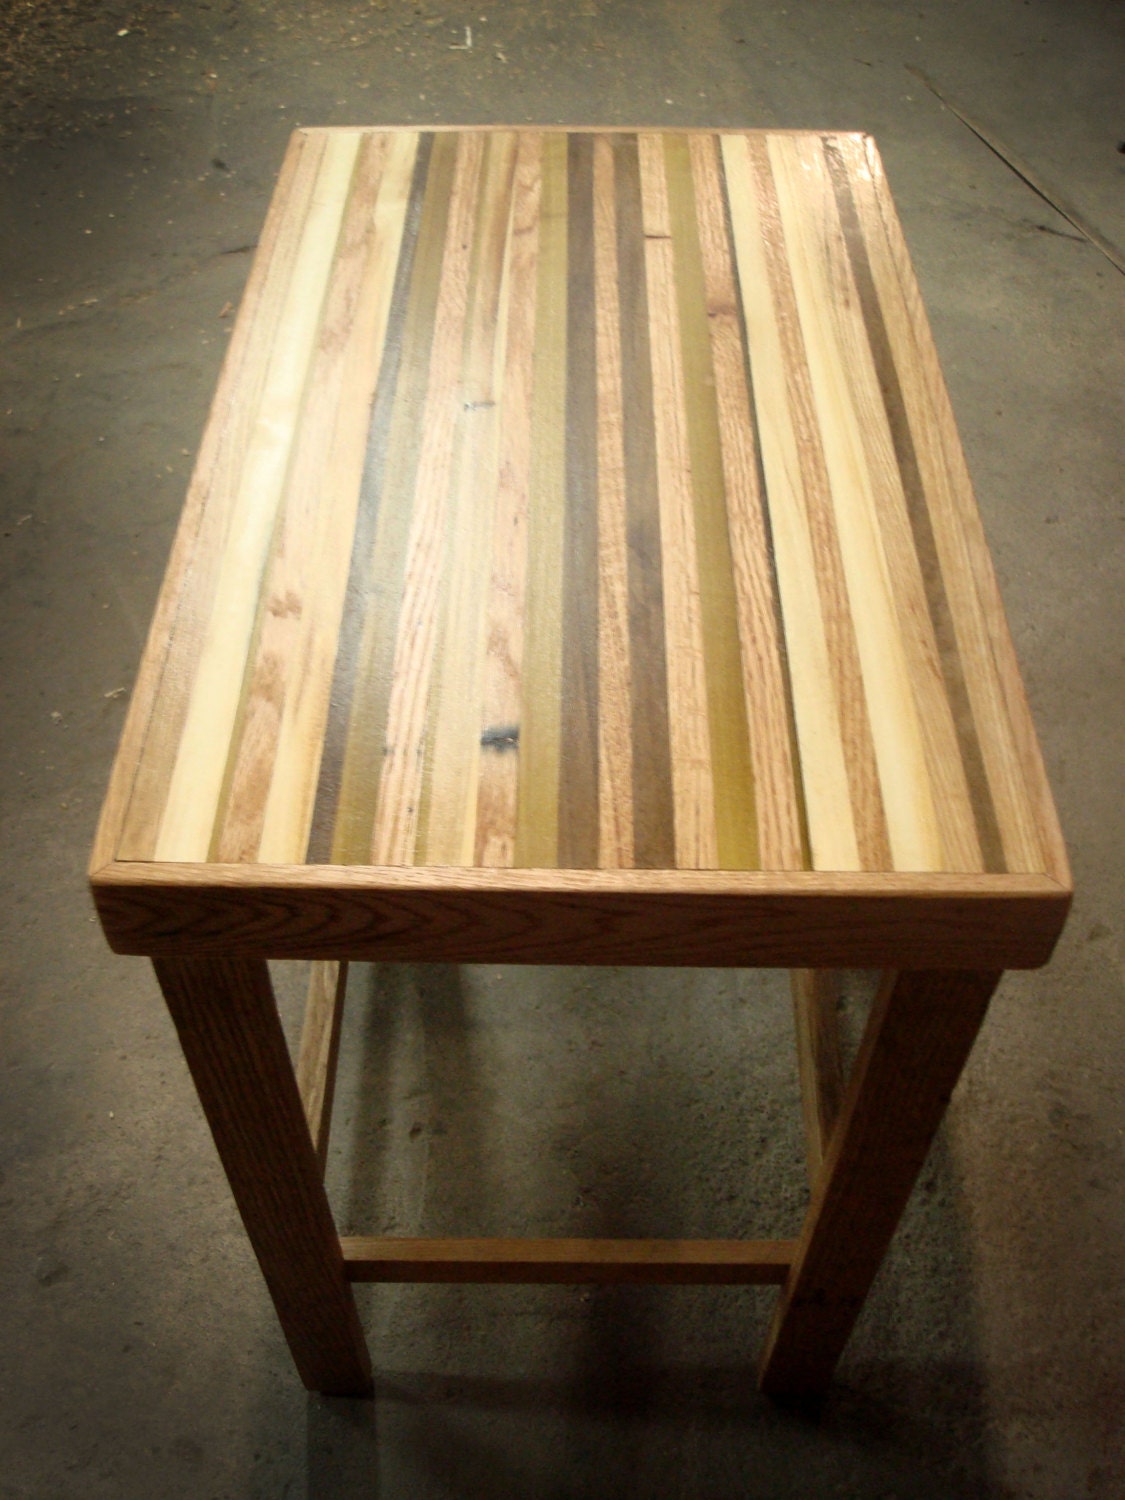 End table, Rustic reclaimed table, Custom,